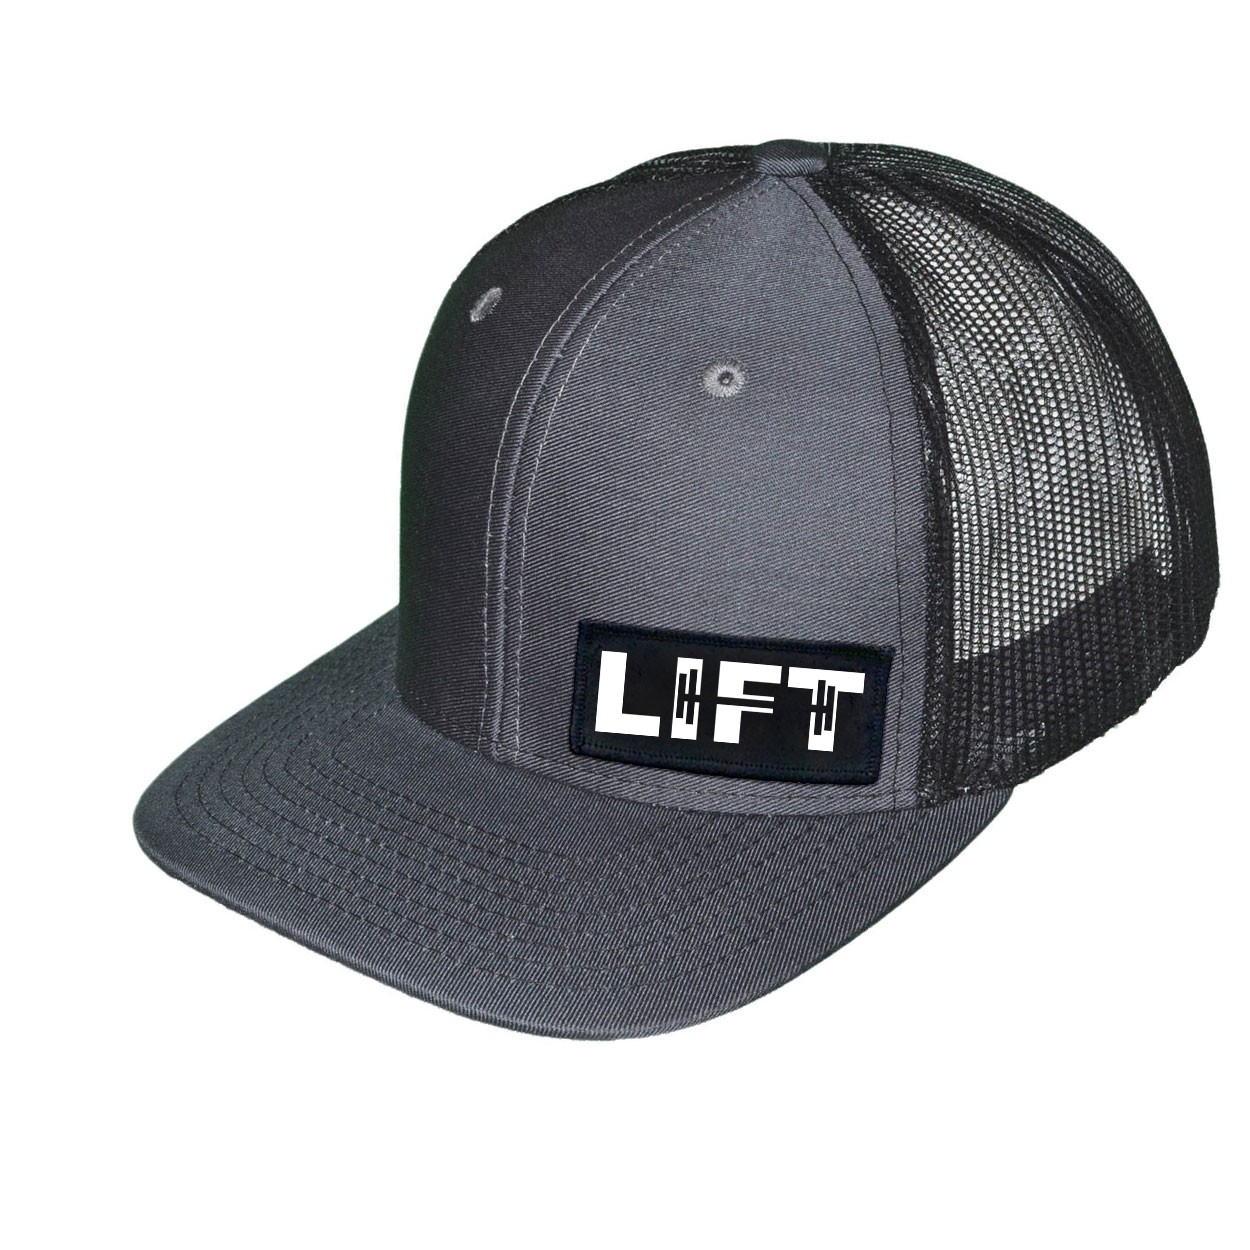 Lift Barbell Logo Night Out Woven Patch Snapback Trucker Hat Dark Gray/Black (White Logo)